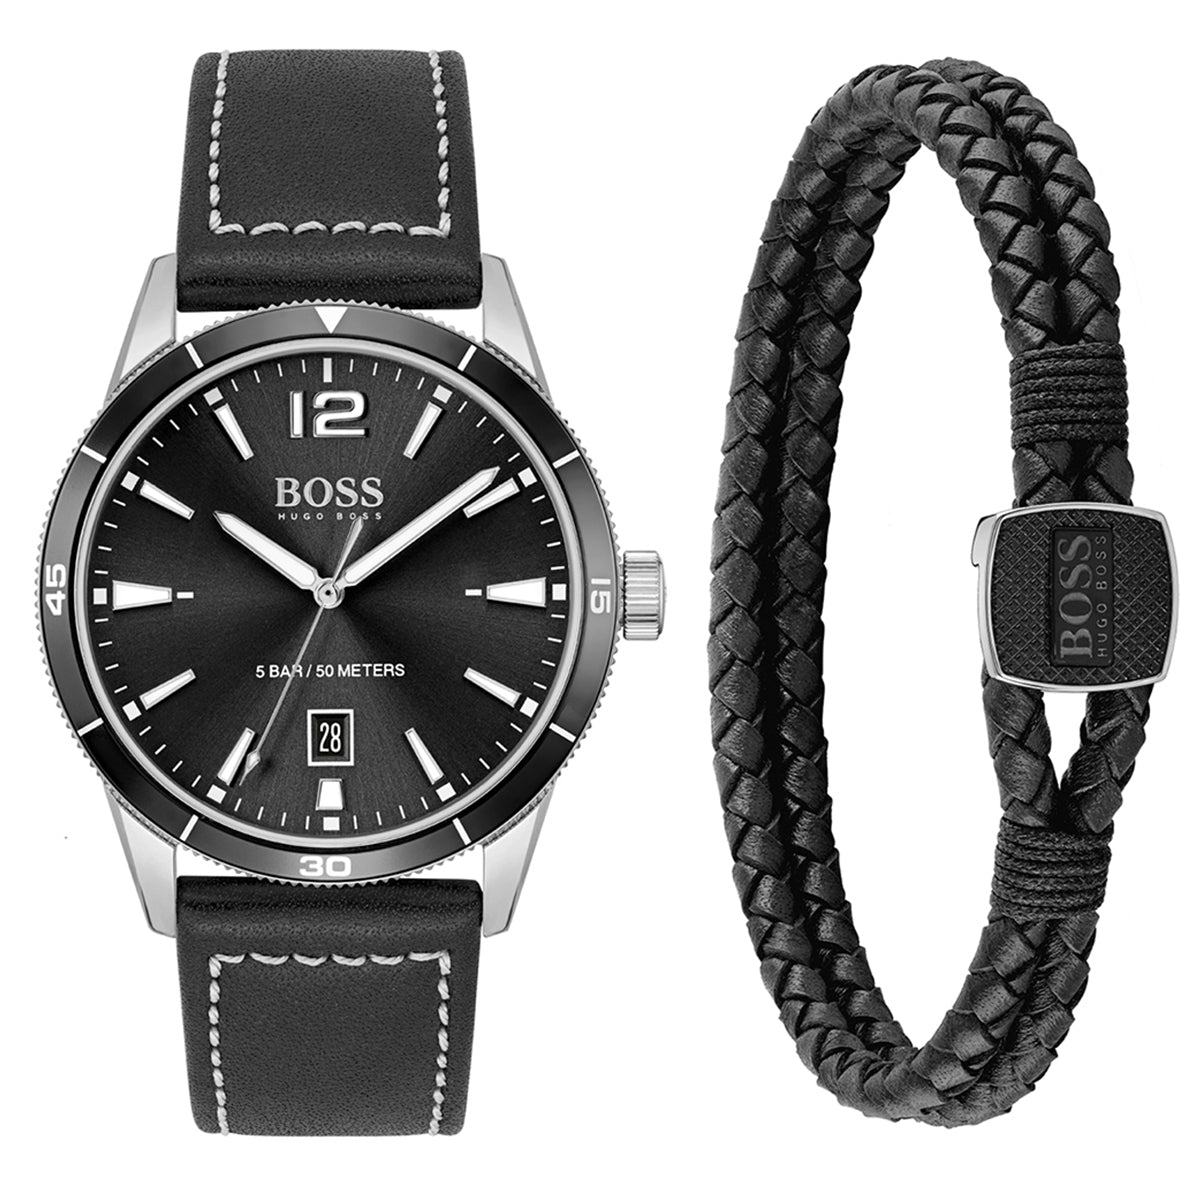 global myndighed fraktion Hugo Boss Watch And Cufflinks Gift Set | electricmall.com.ng